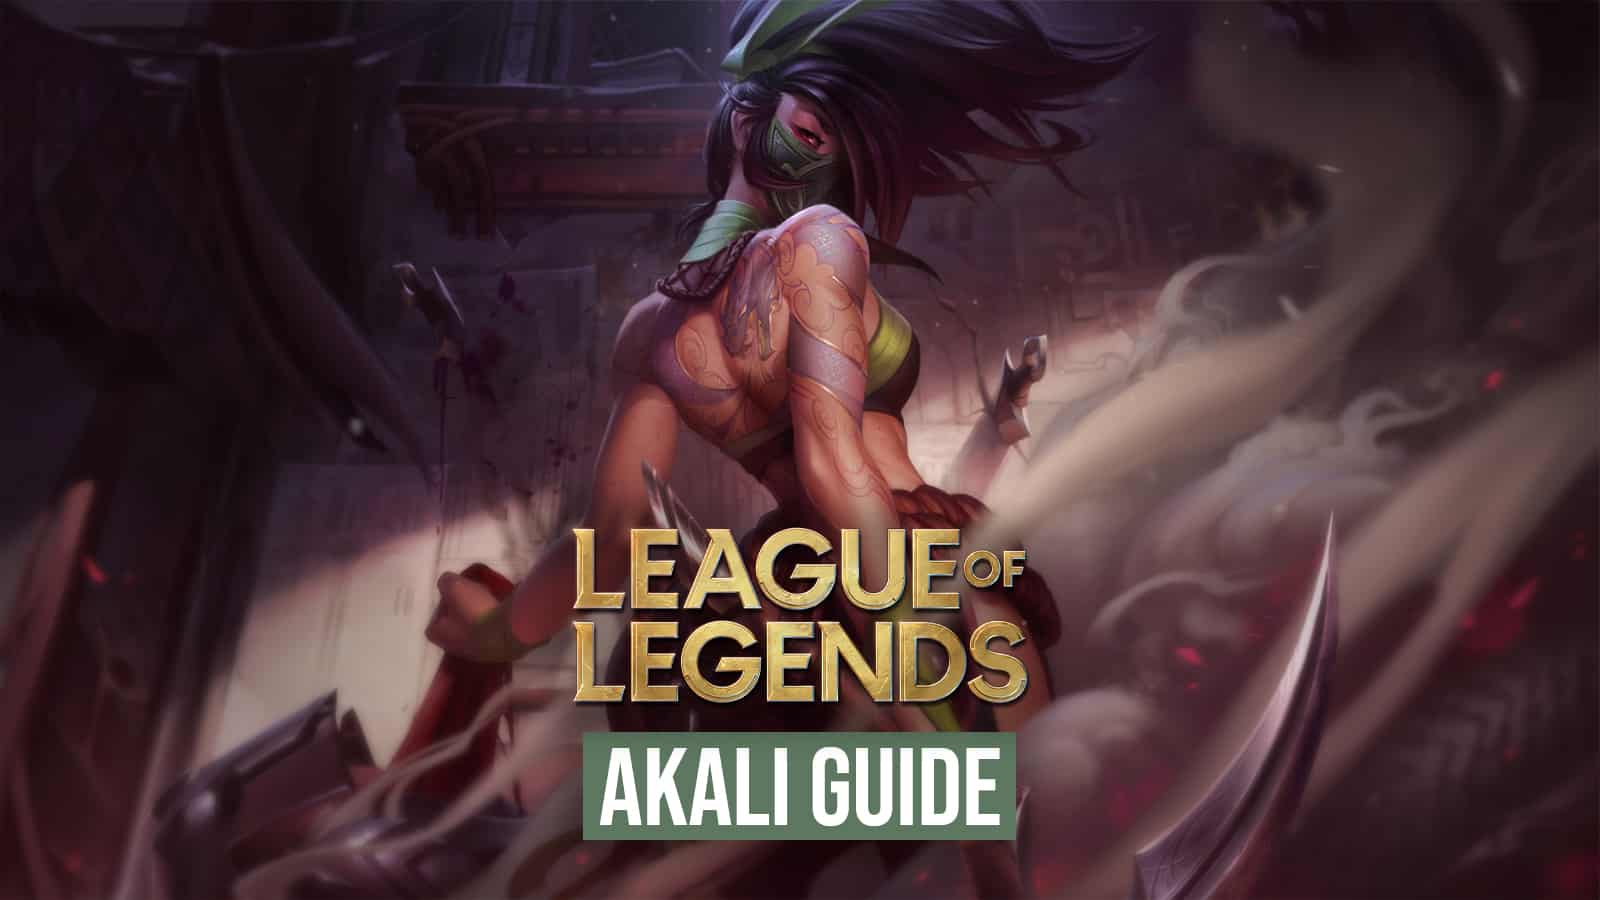 League of Legends Akali guide season 11 best runes builds tips tricks skins